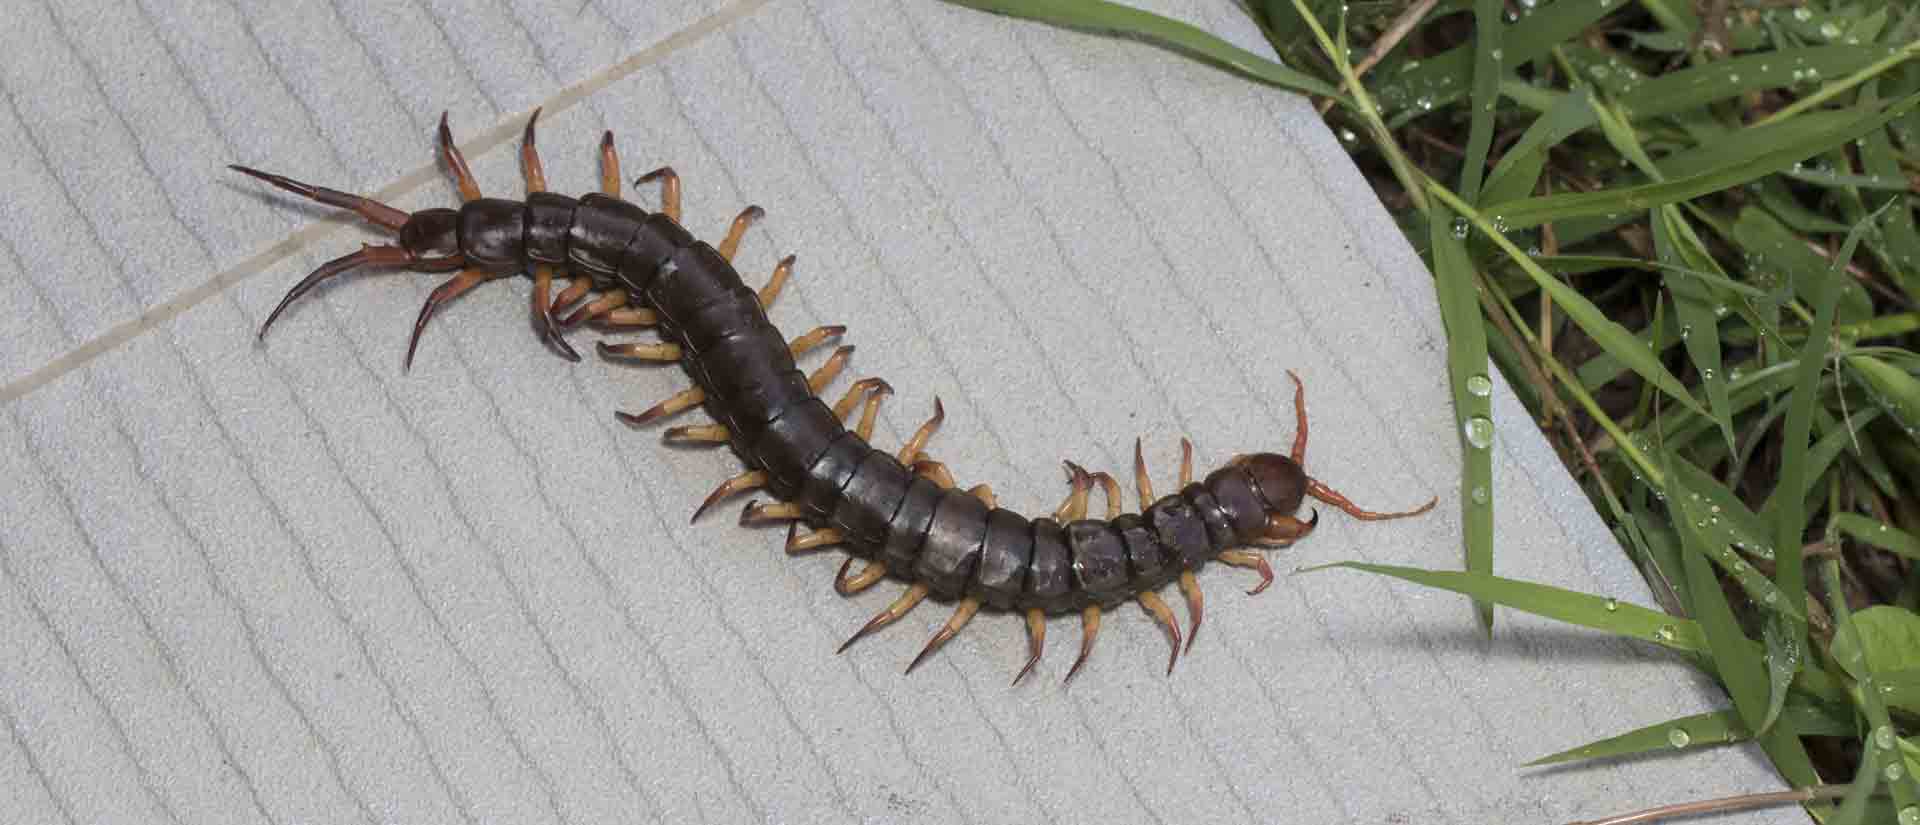 centipede pest control clairemont